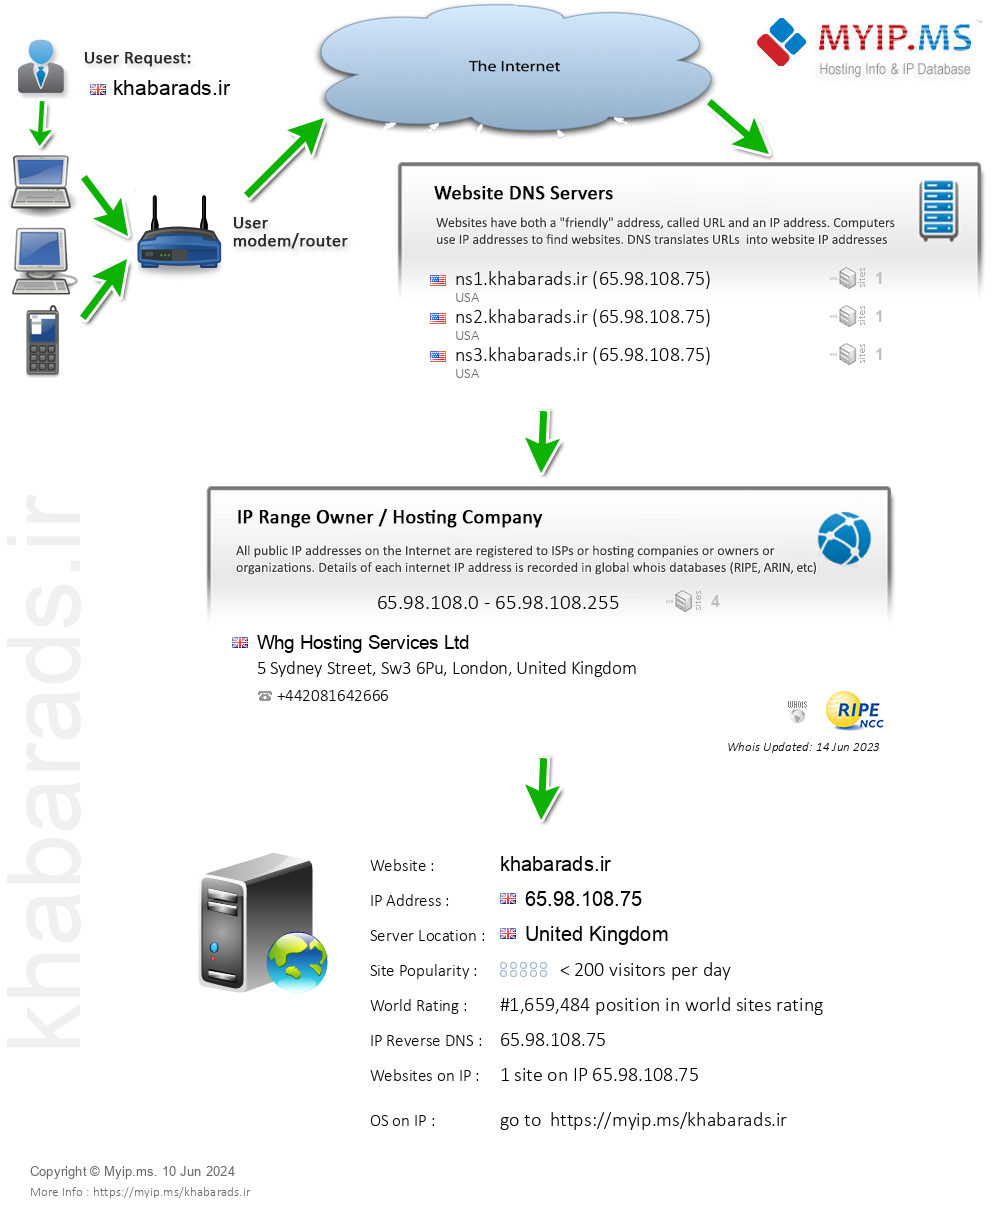 Khabarads.ir - Website Hosting Visual IP Diagram